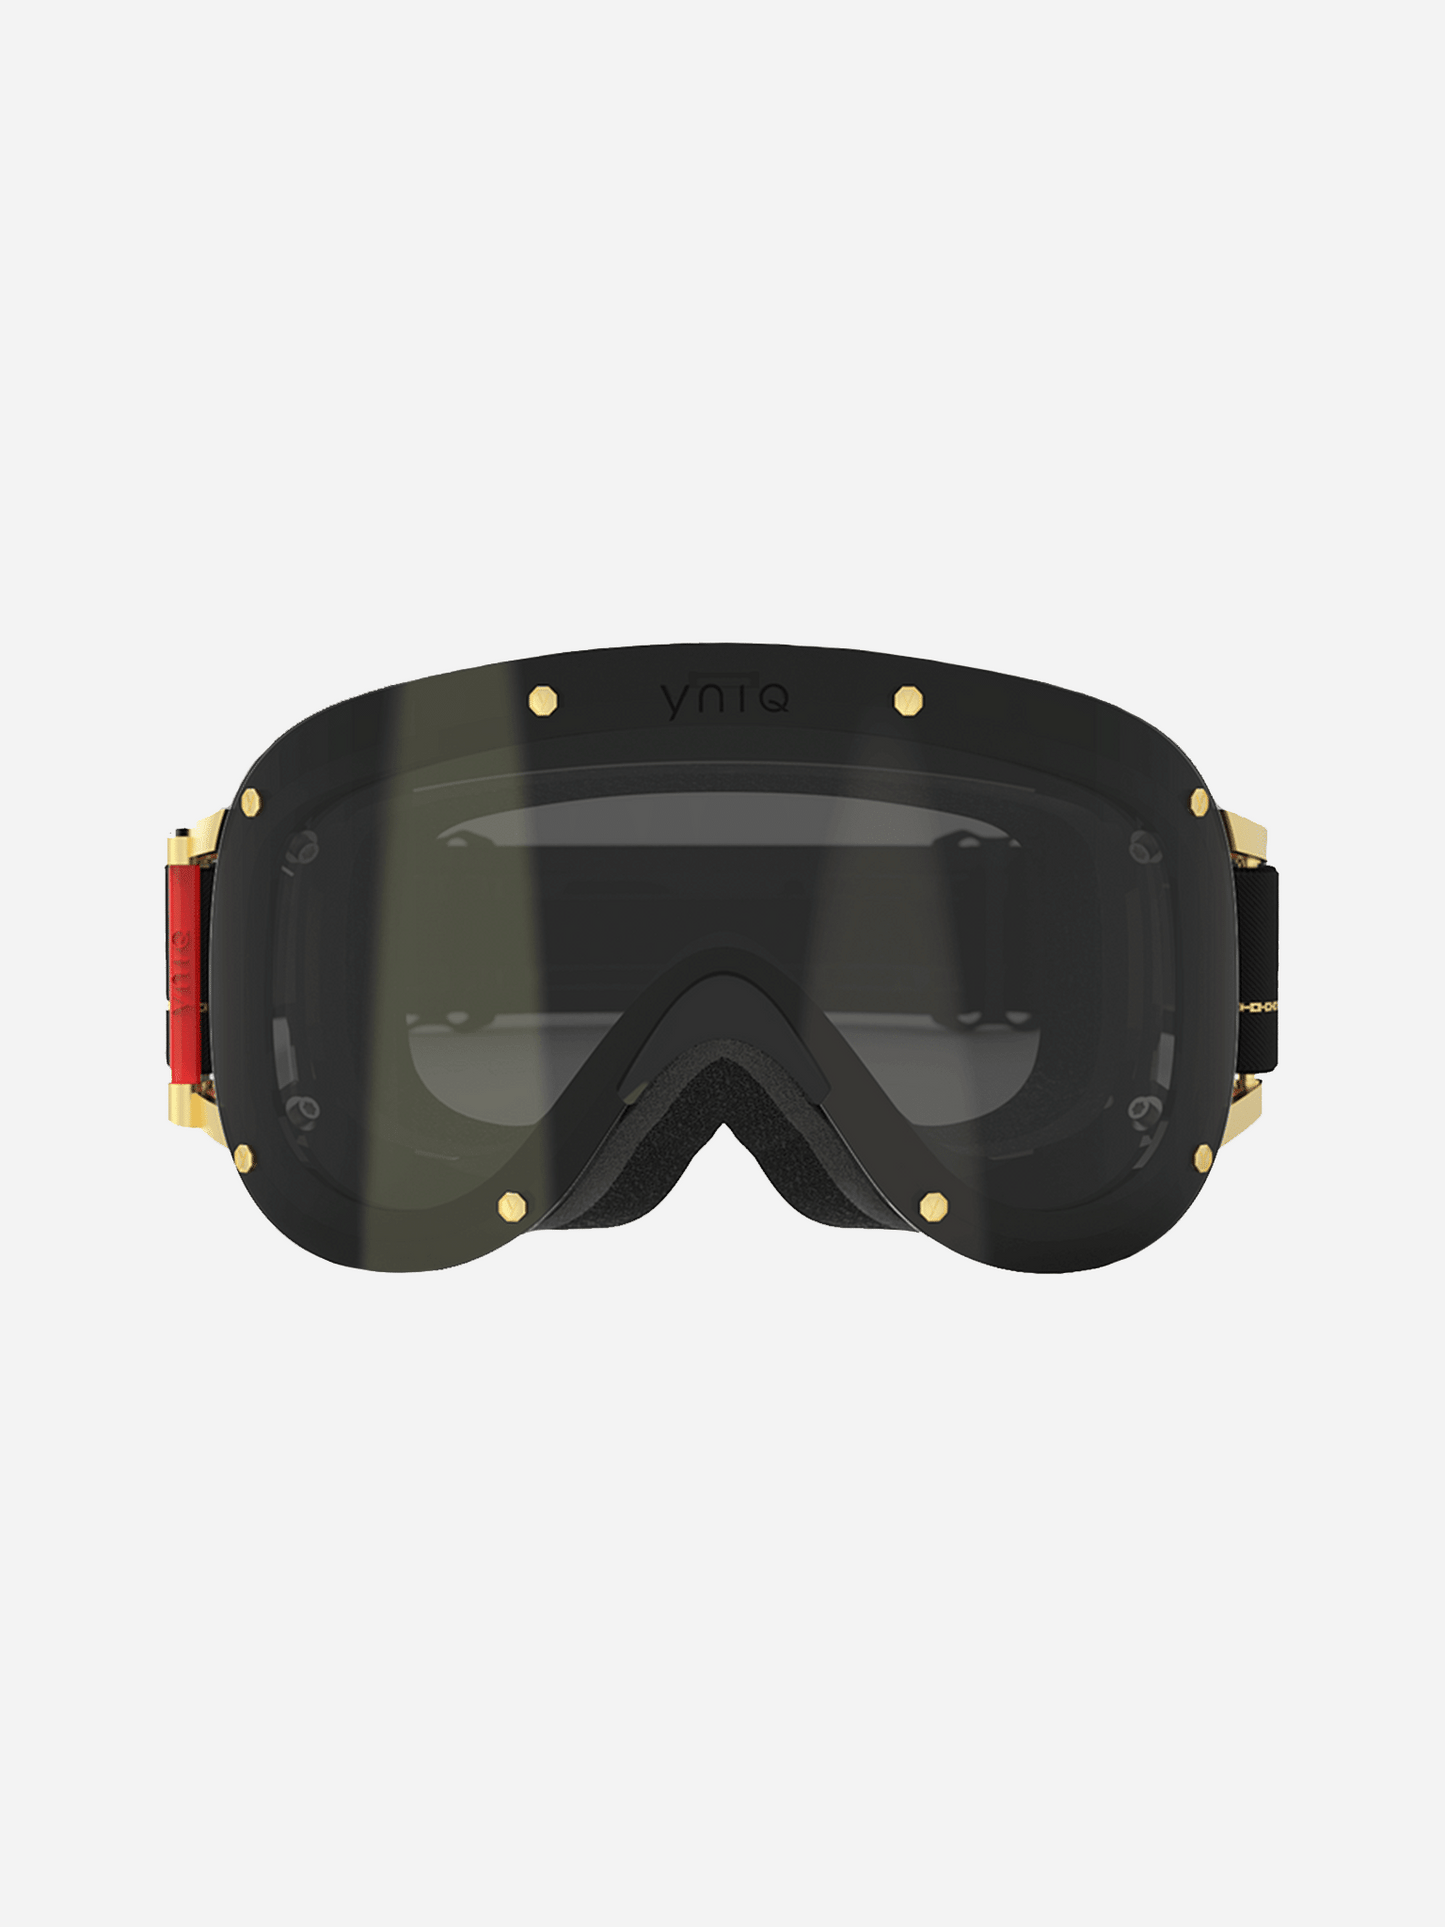 YNIQ Model Four Black Gold Goggle